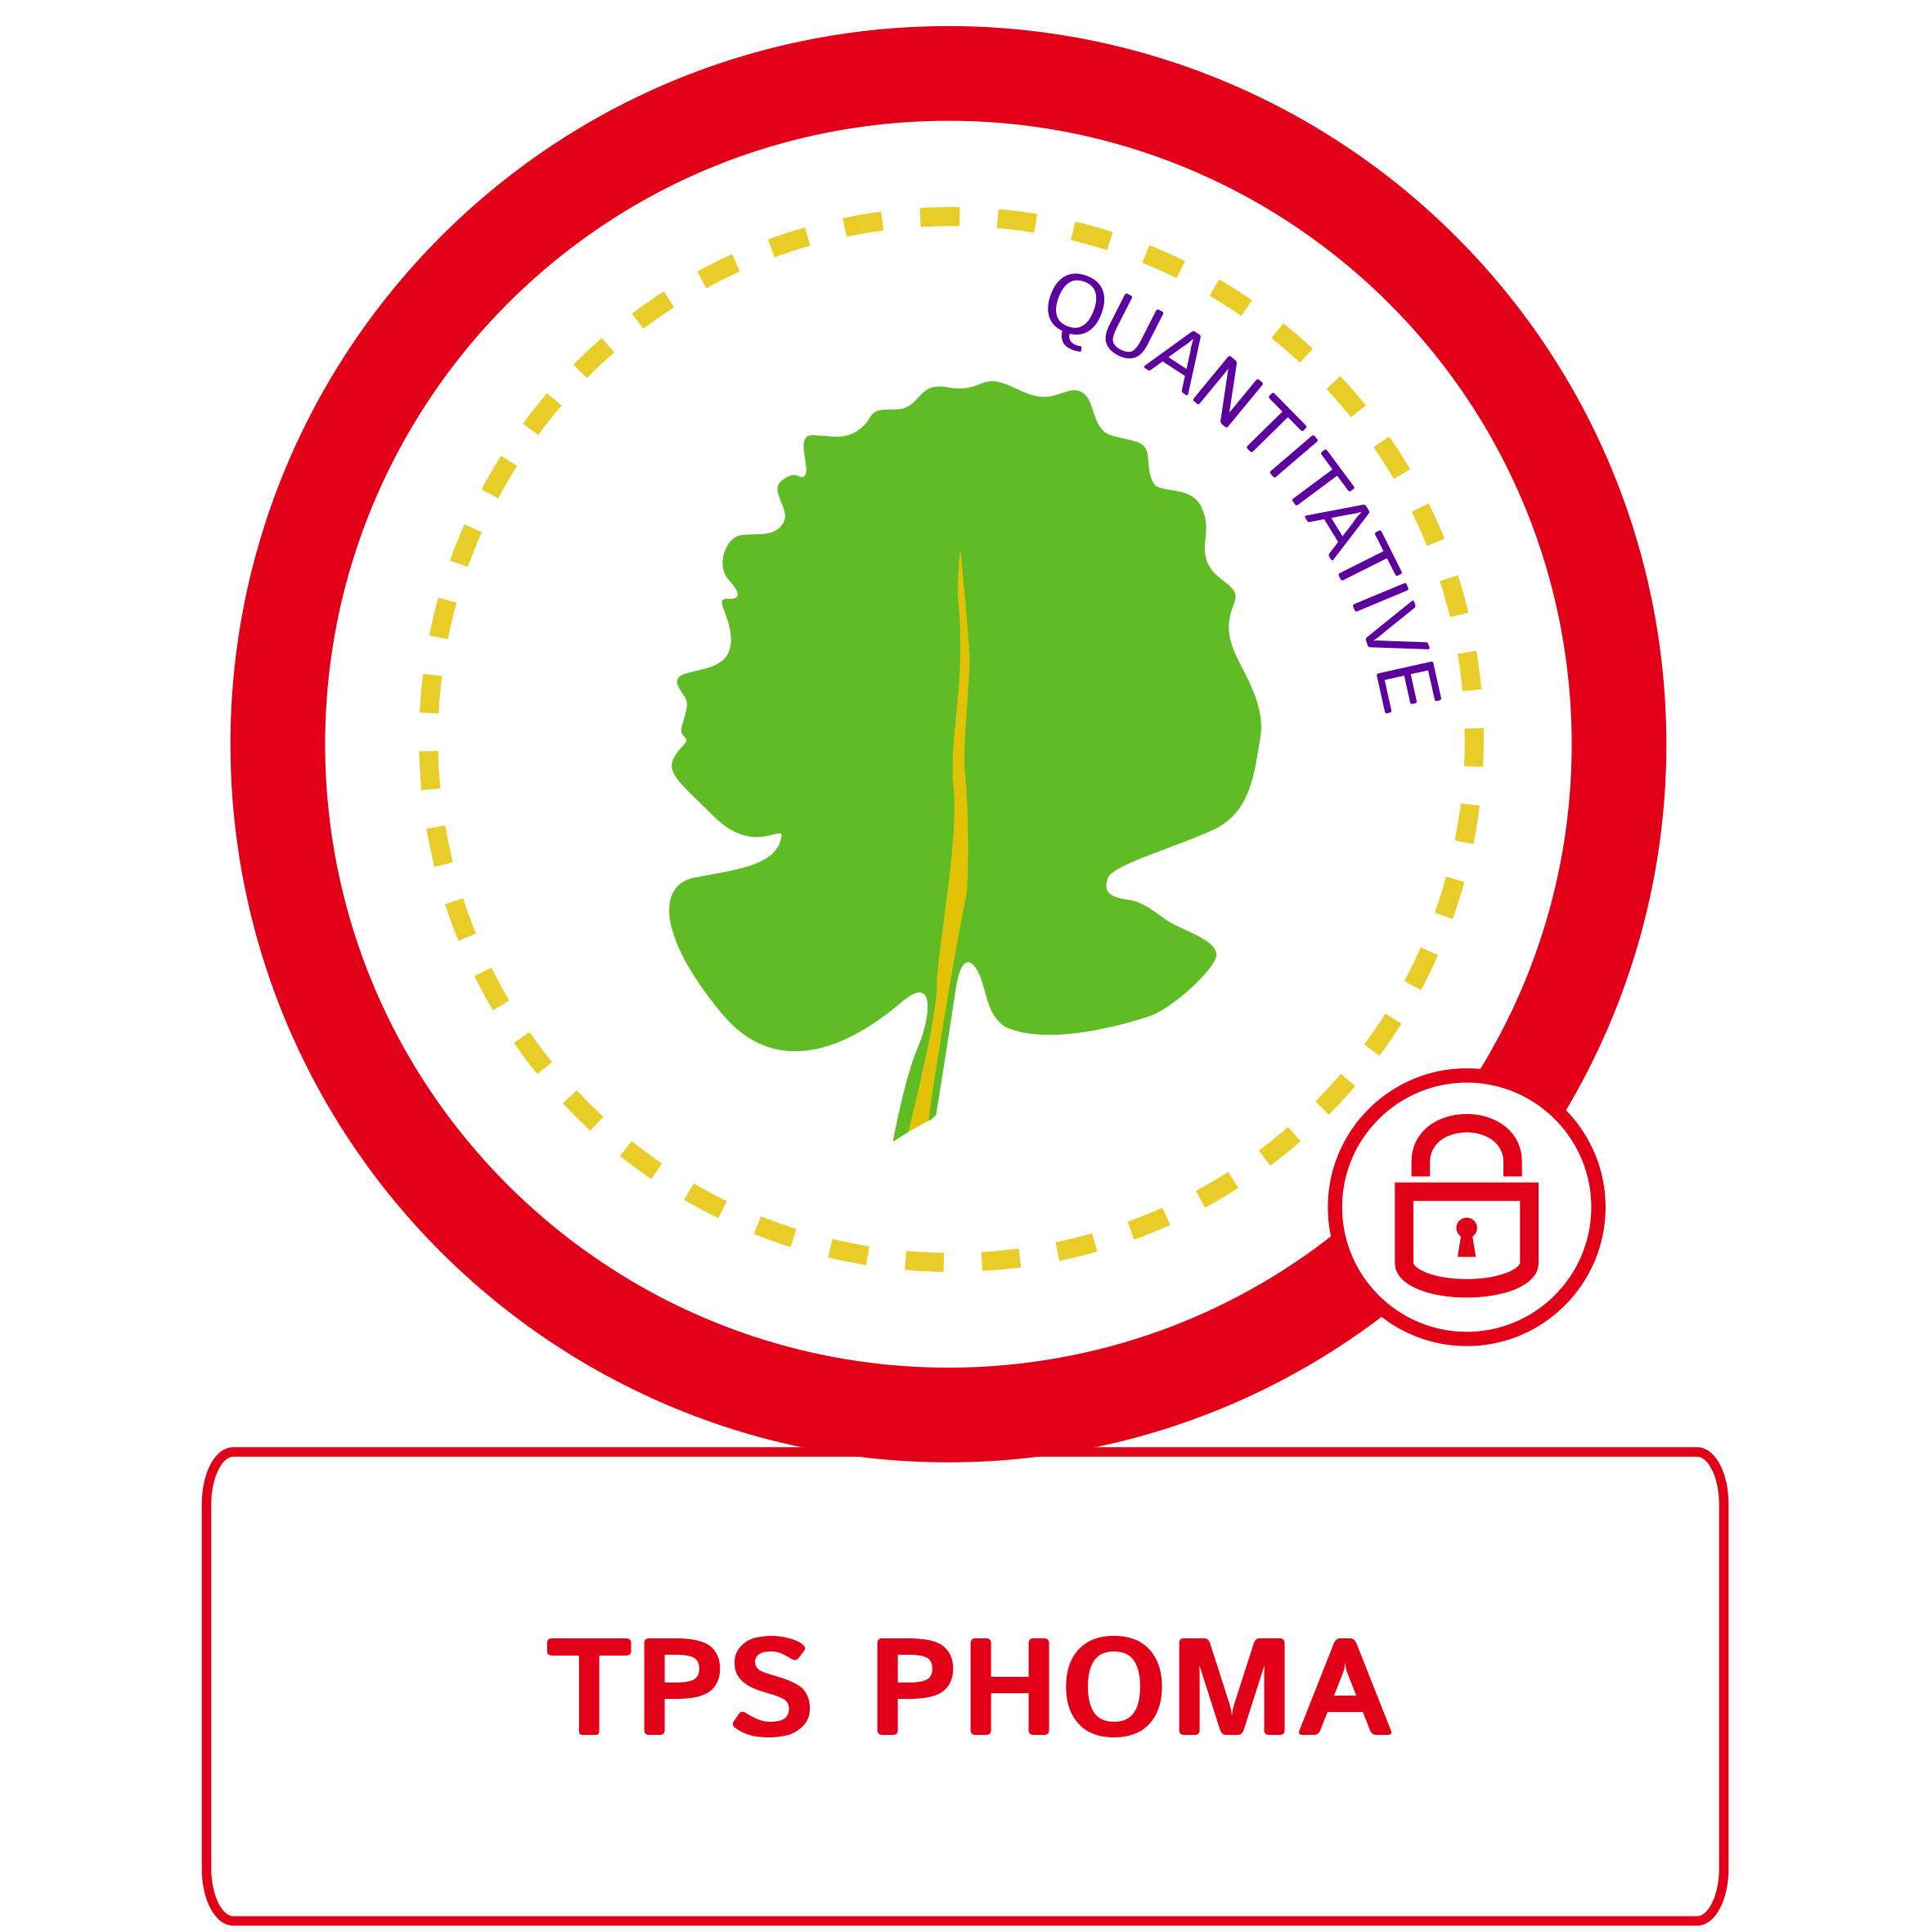 TPS phoma quantitative